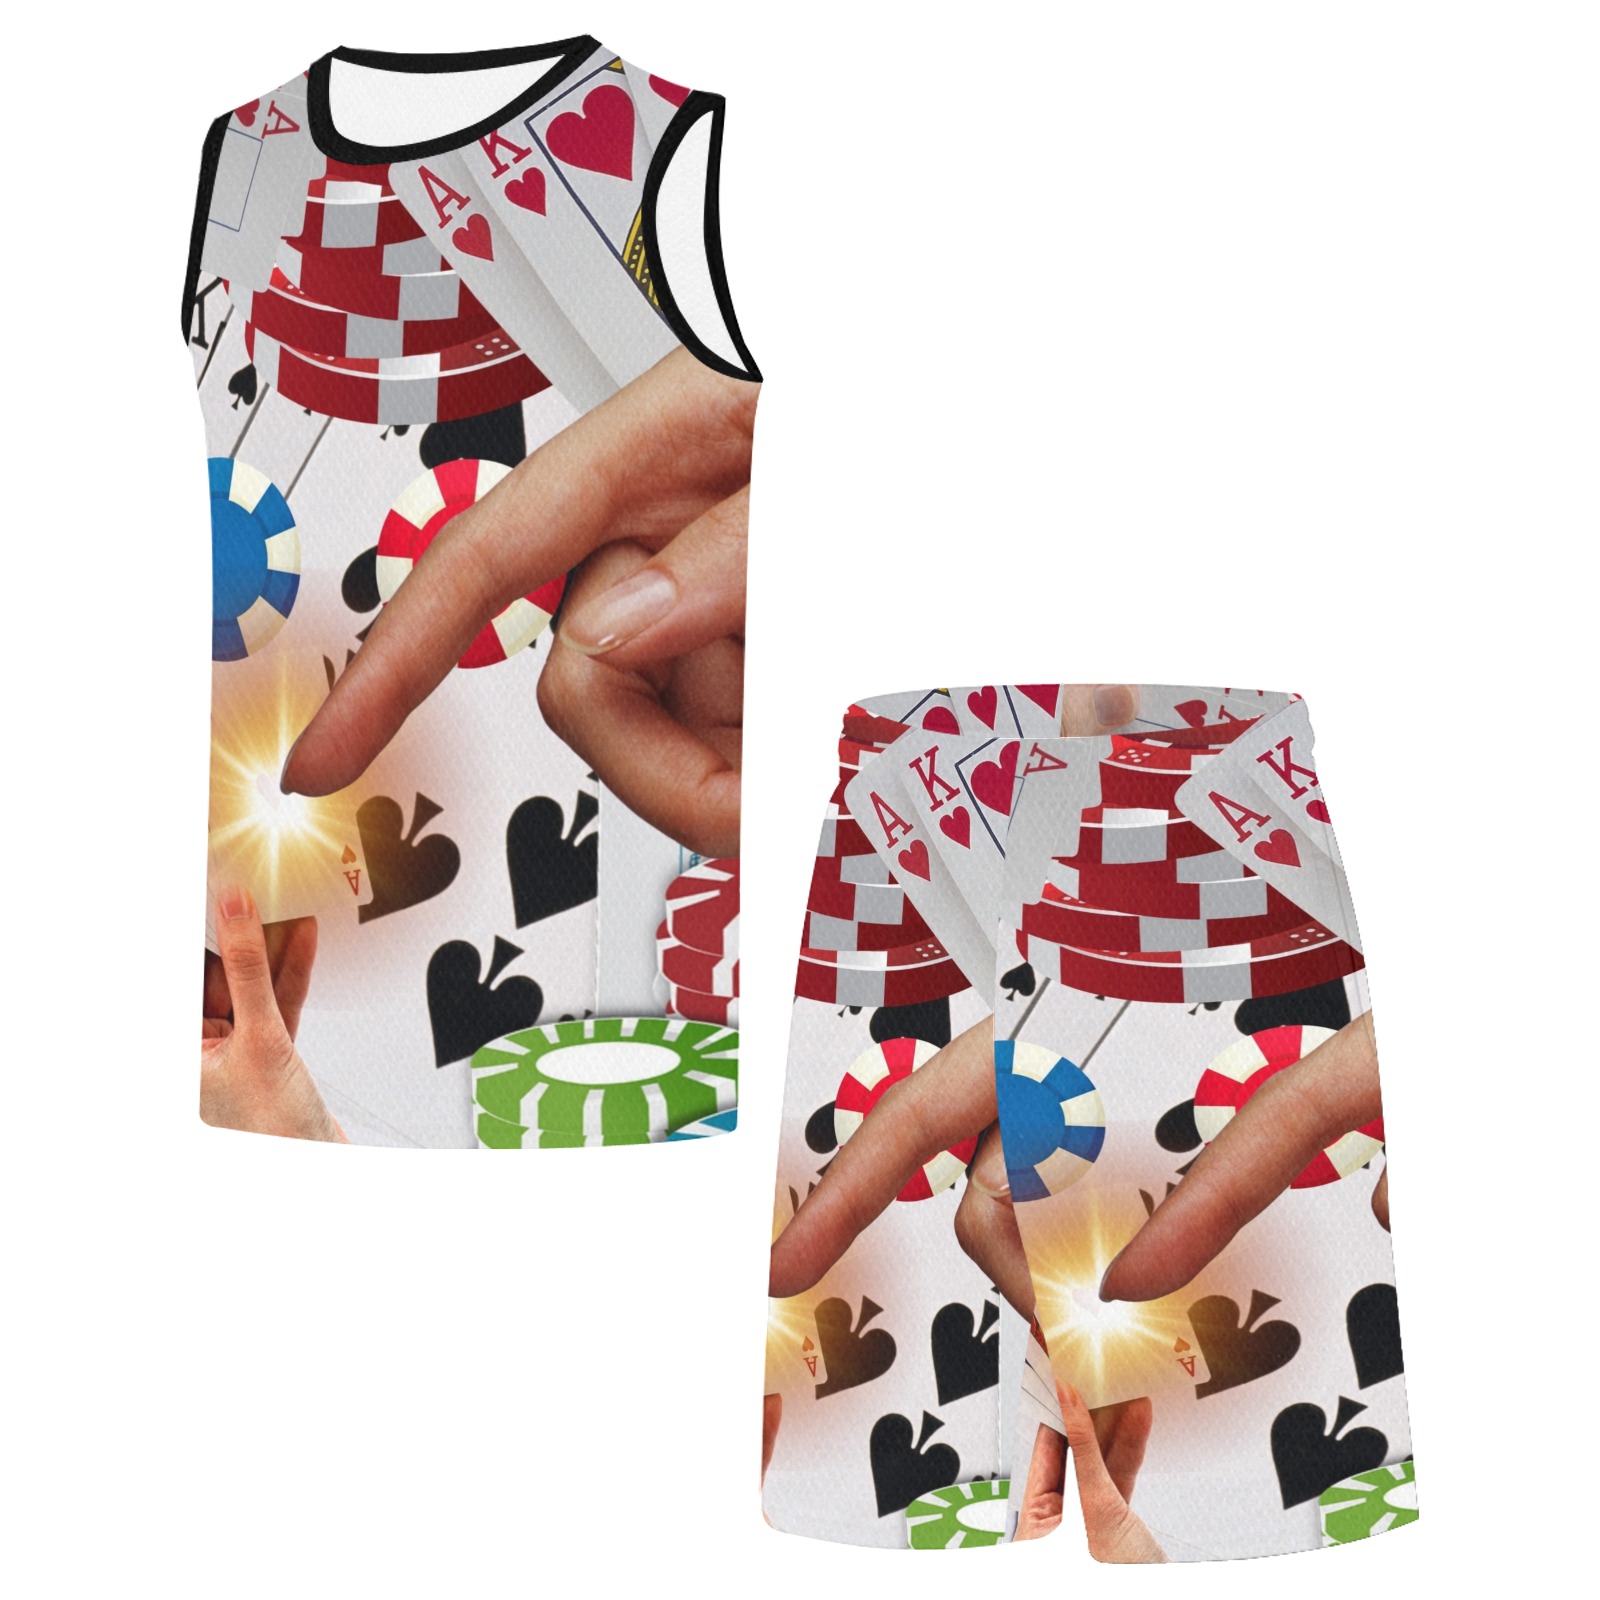 New Basketball Uniform with Pocket